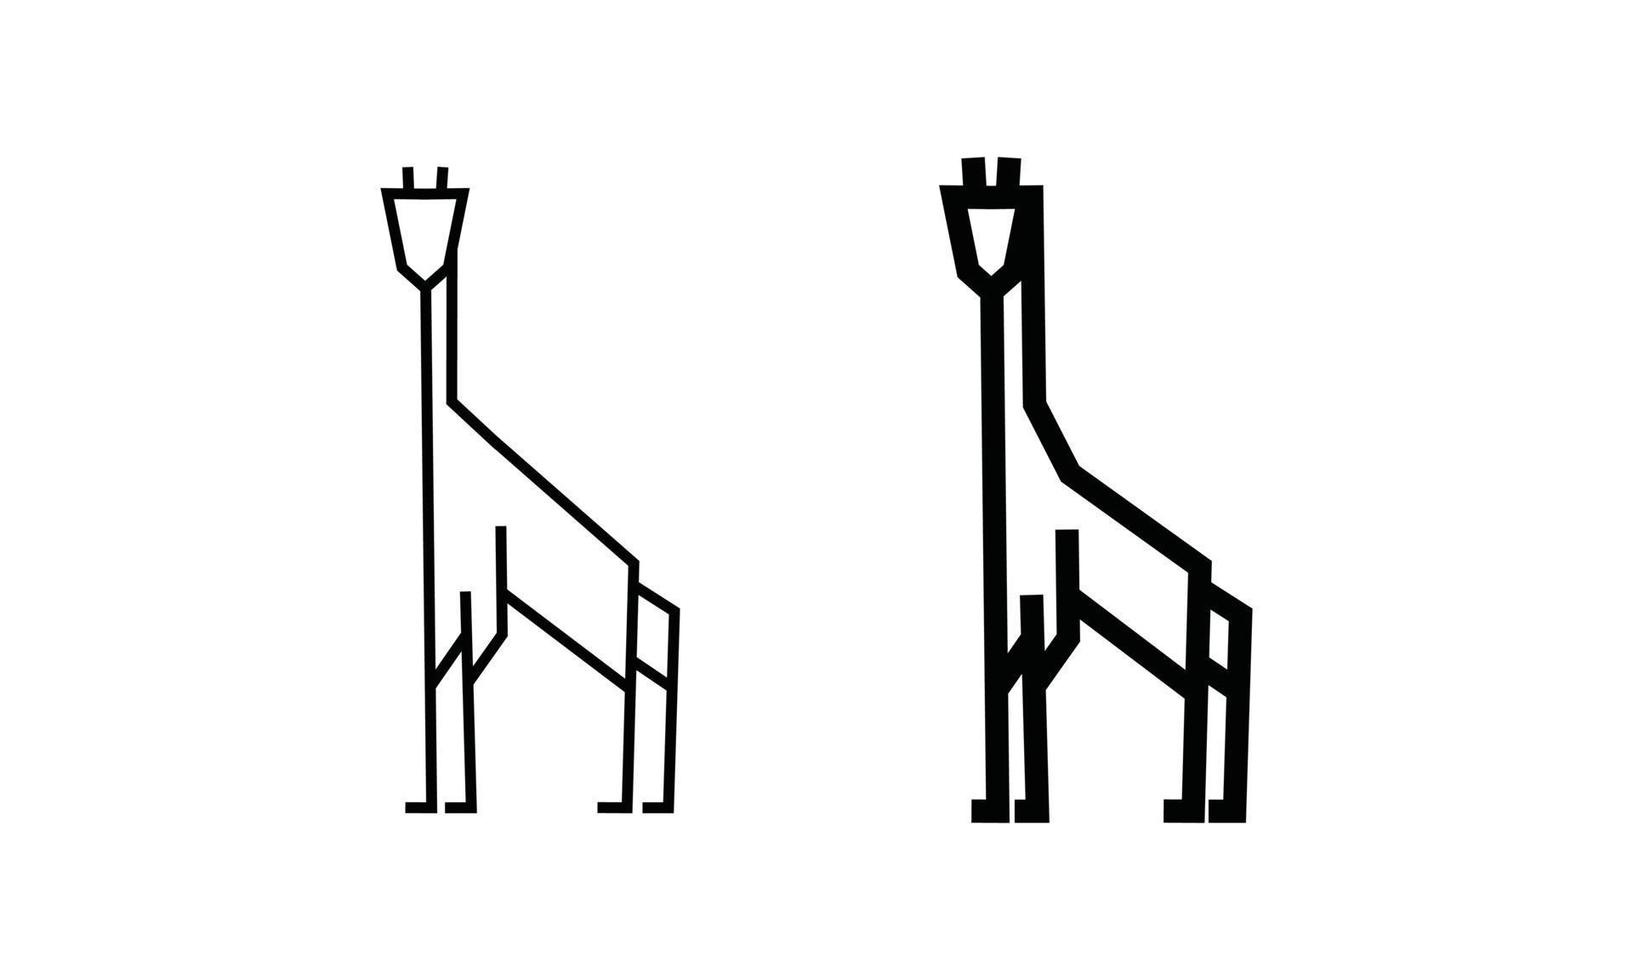 giraffe line art vector illustration isolated on white background. minimal outline icon for simple animal logo concept.